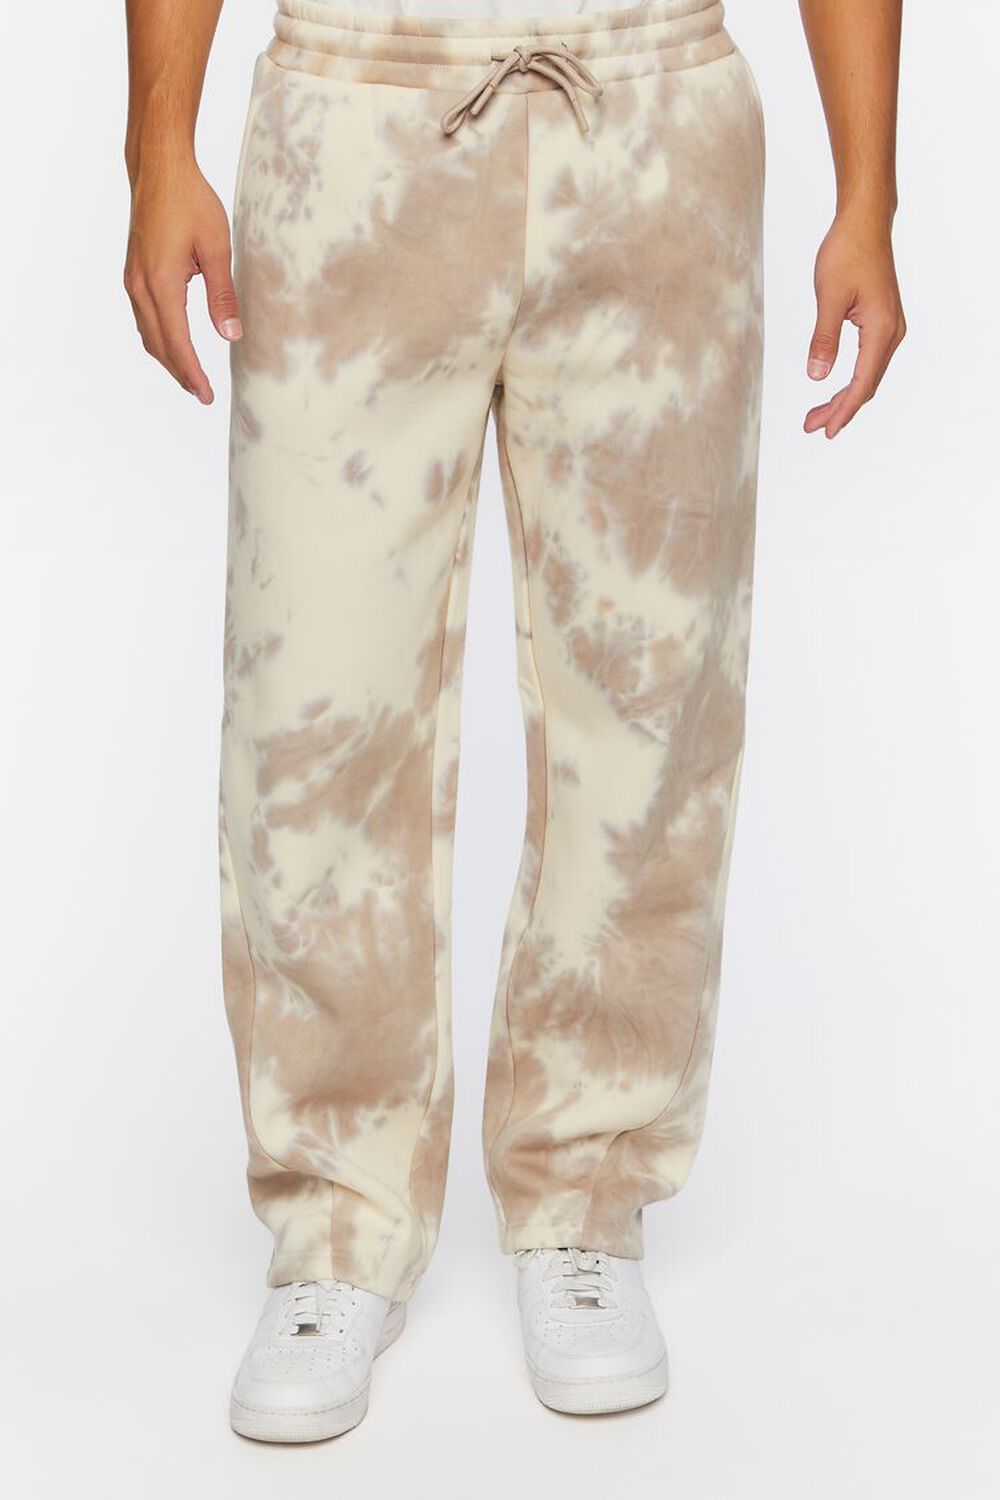 TAUPE/CREAM Tie-Dye Fleece Sweatpants, image 2